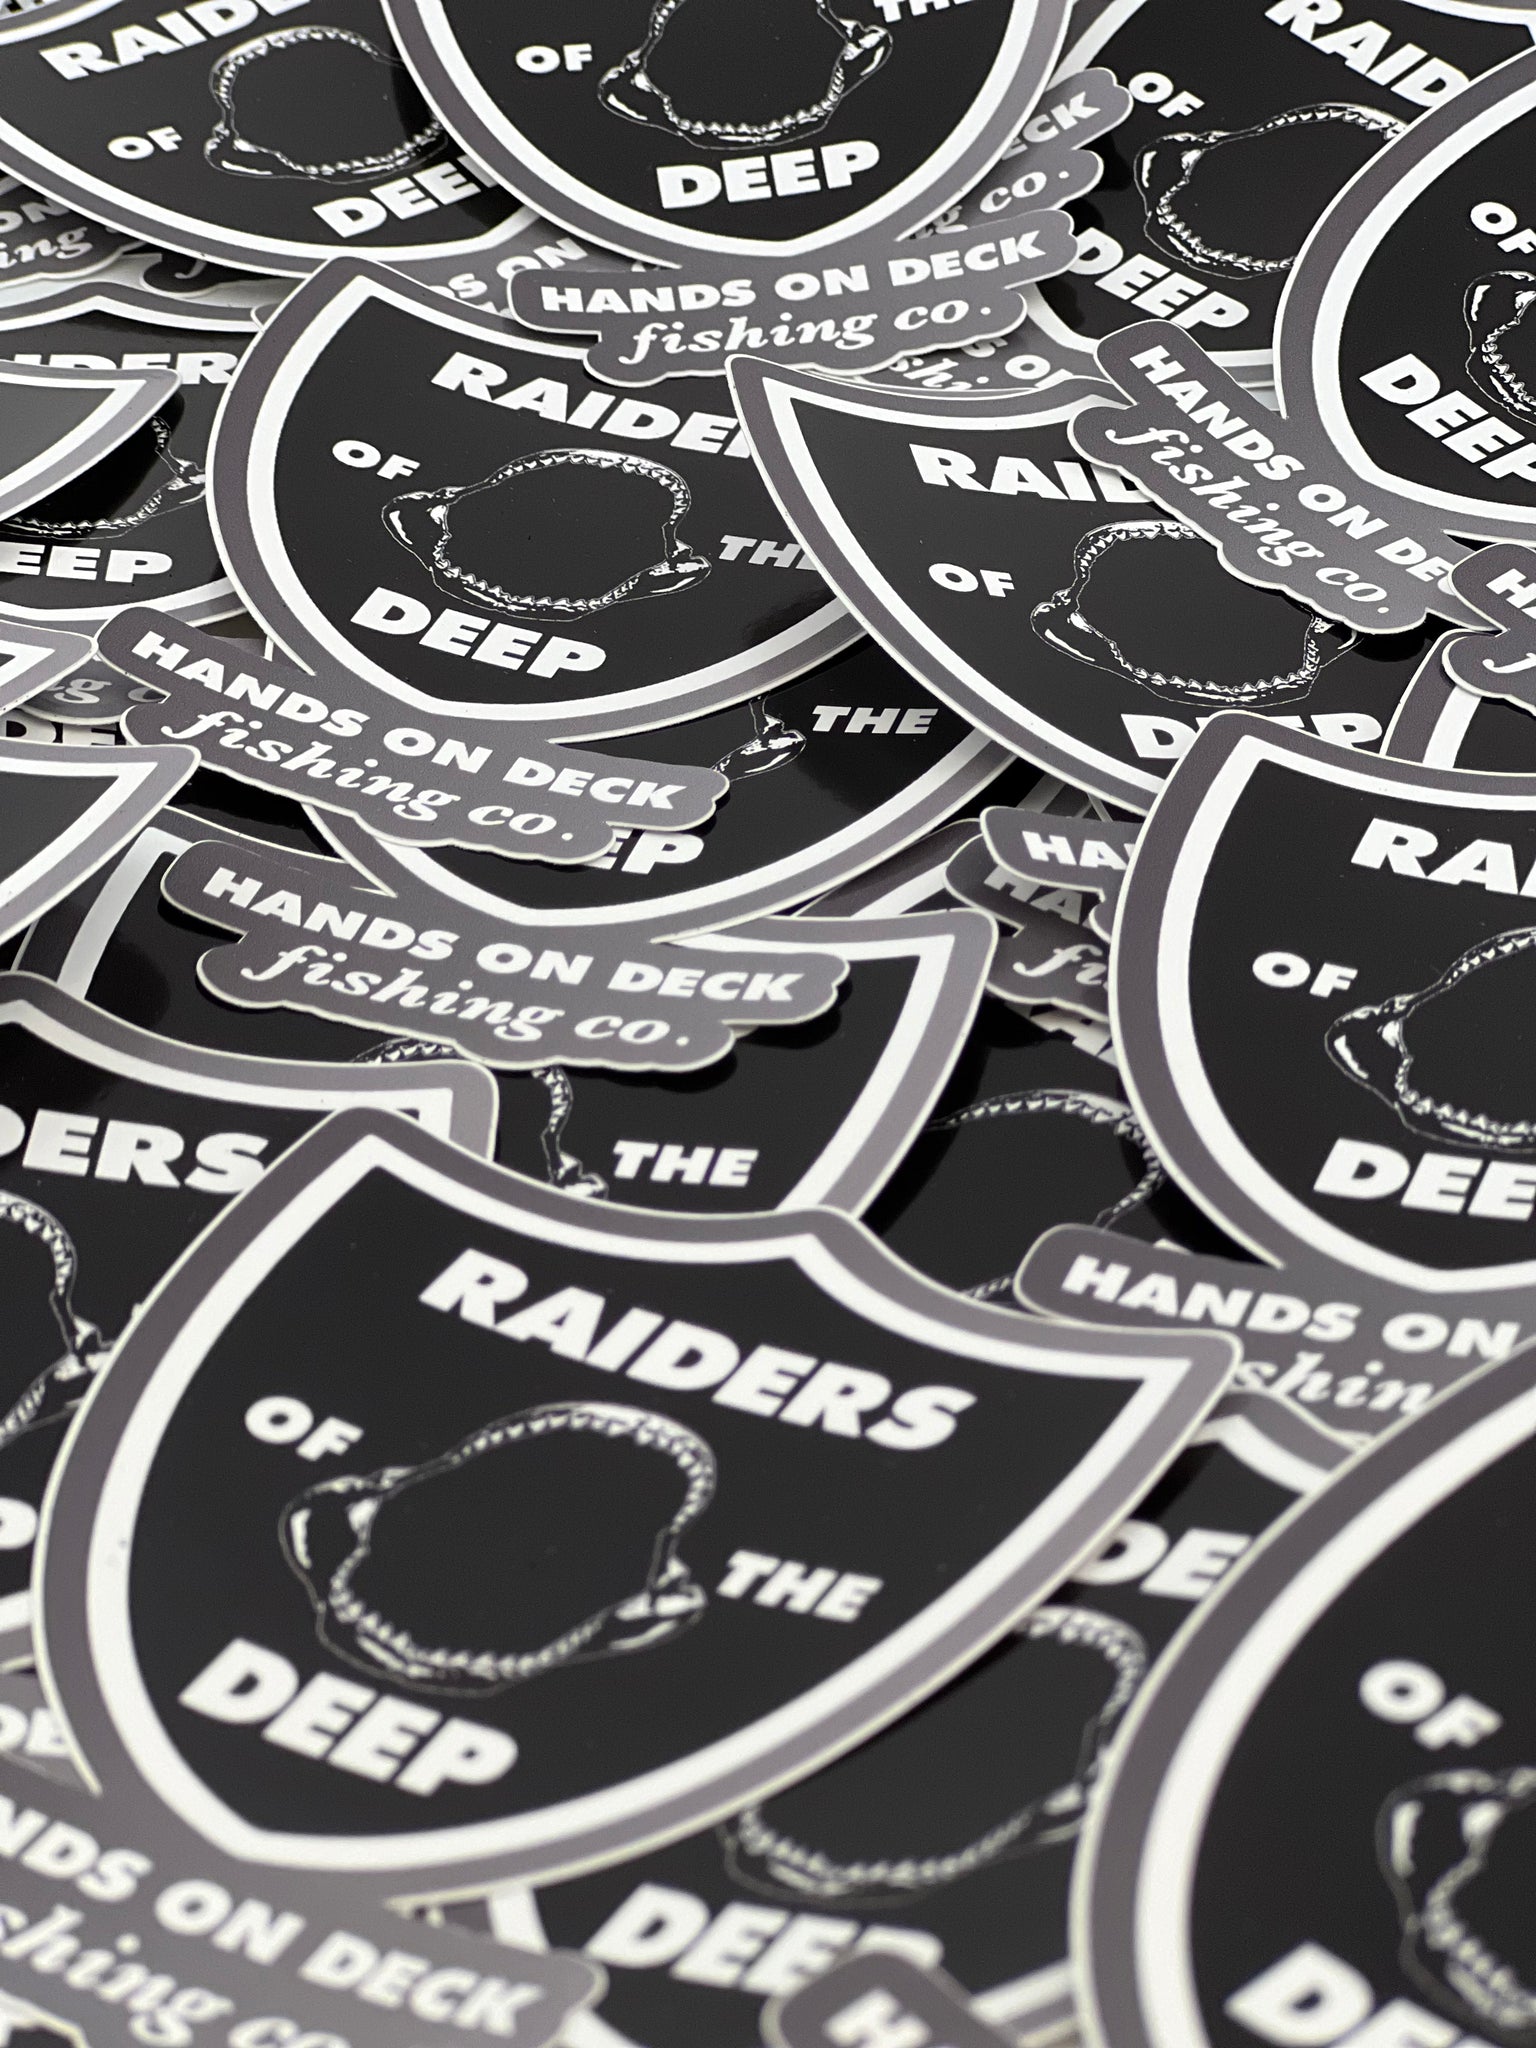 Raiders of the Deep Sticker